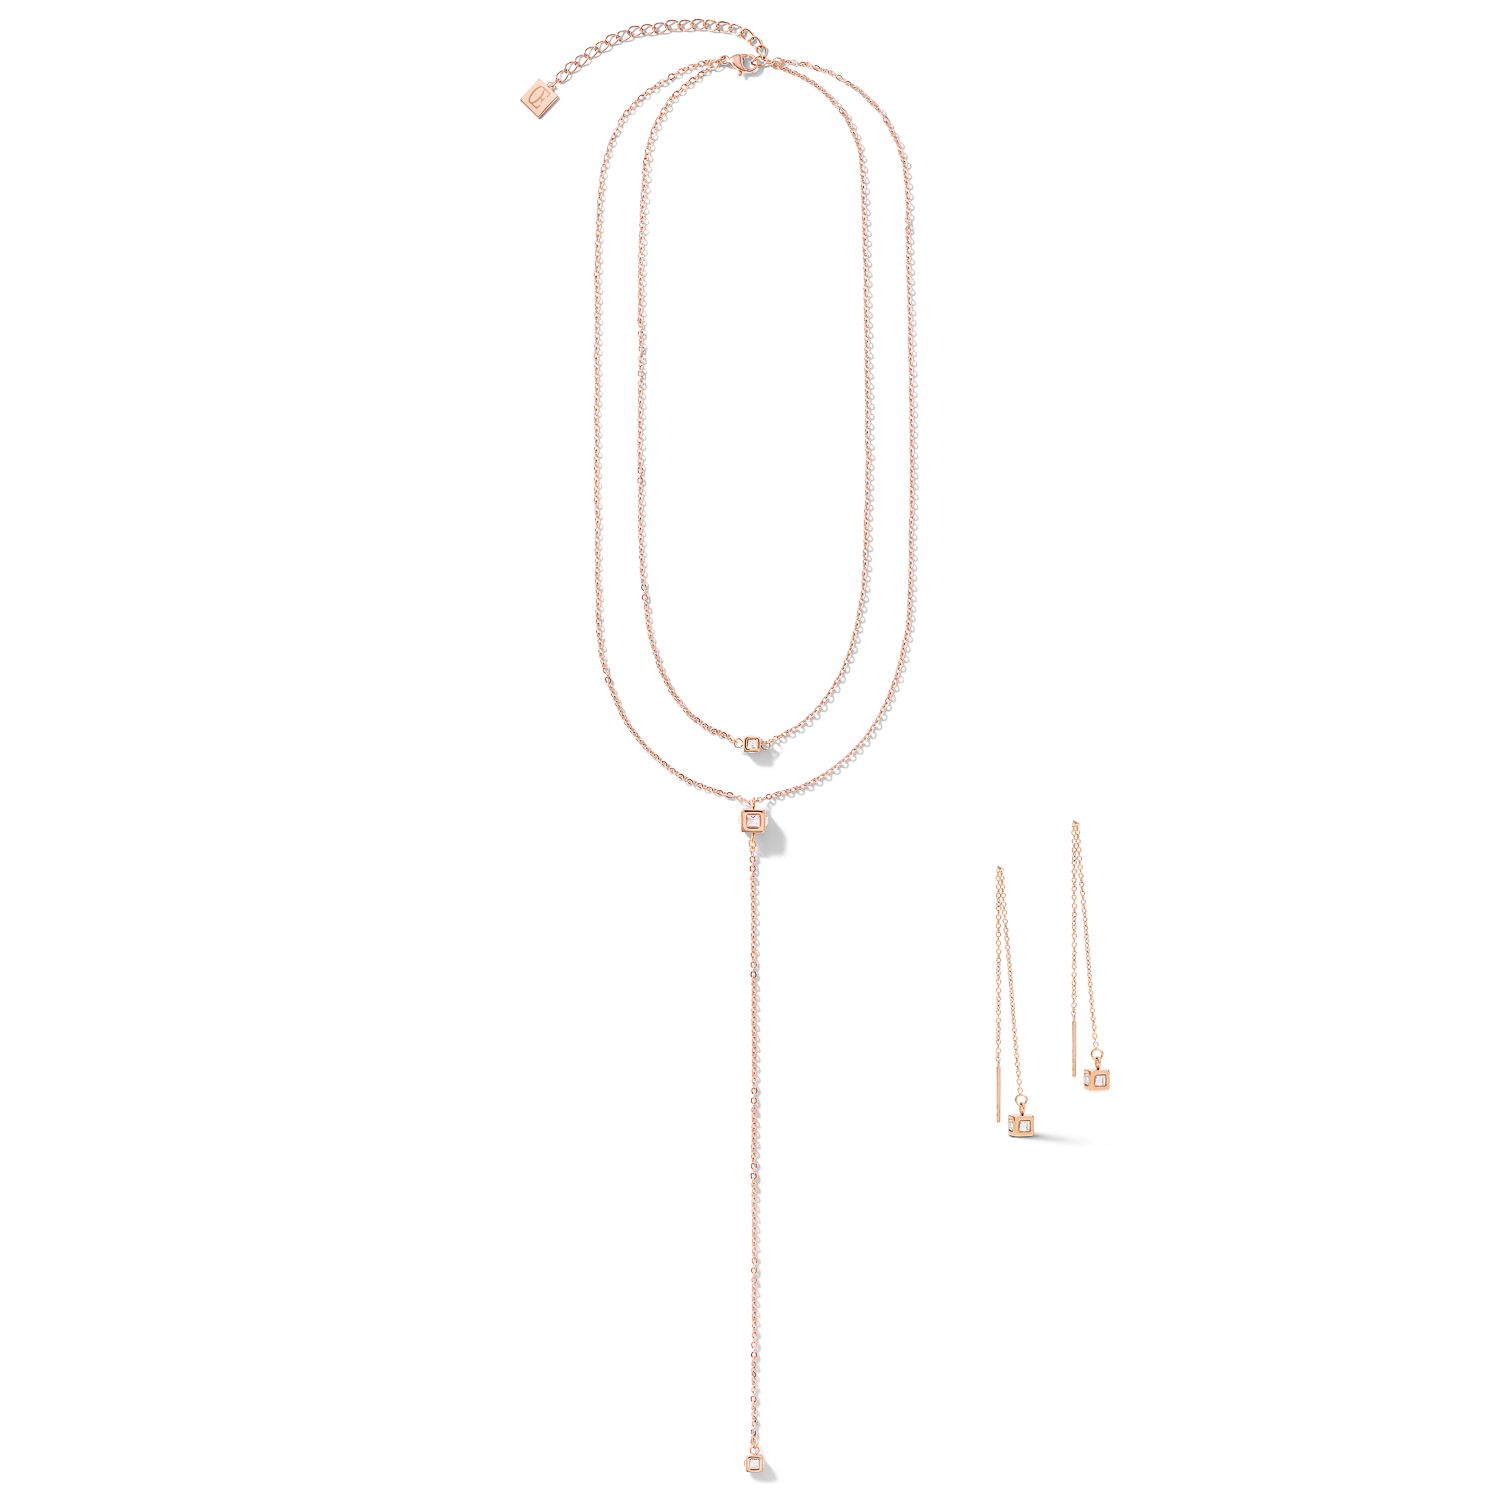 Collier Y long Minimalist Chain acier or rose cristal